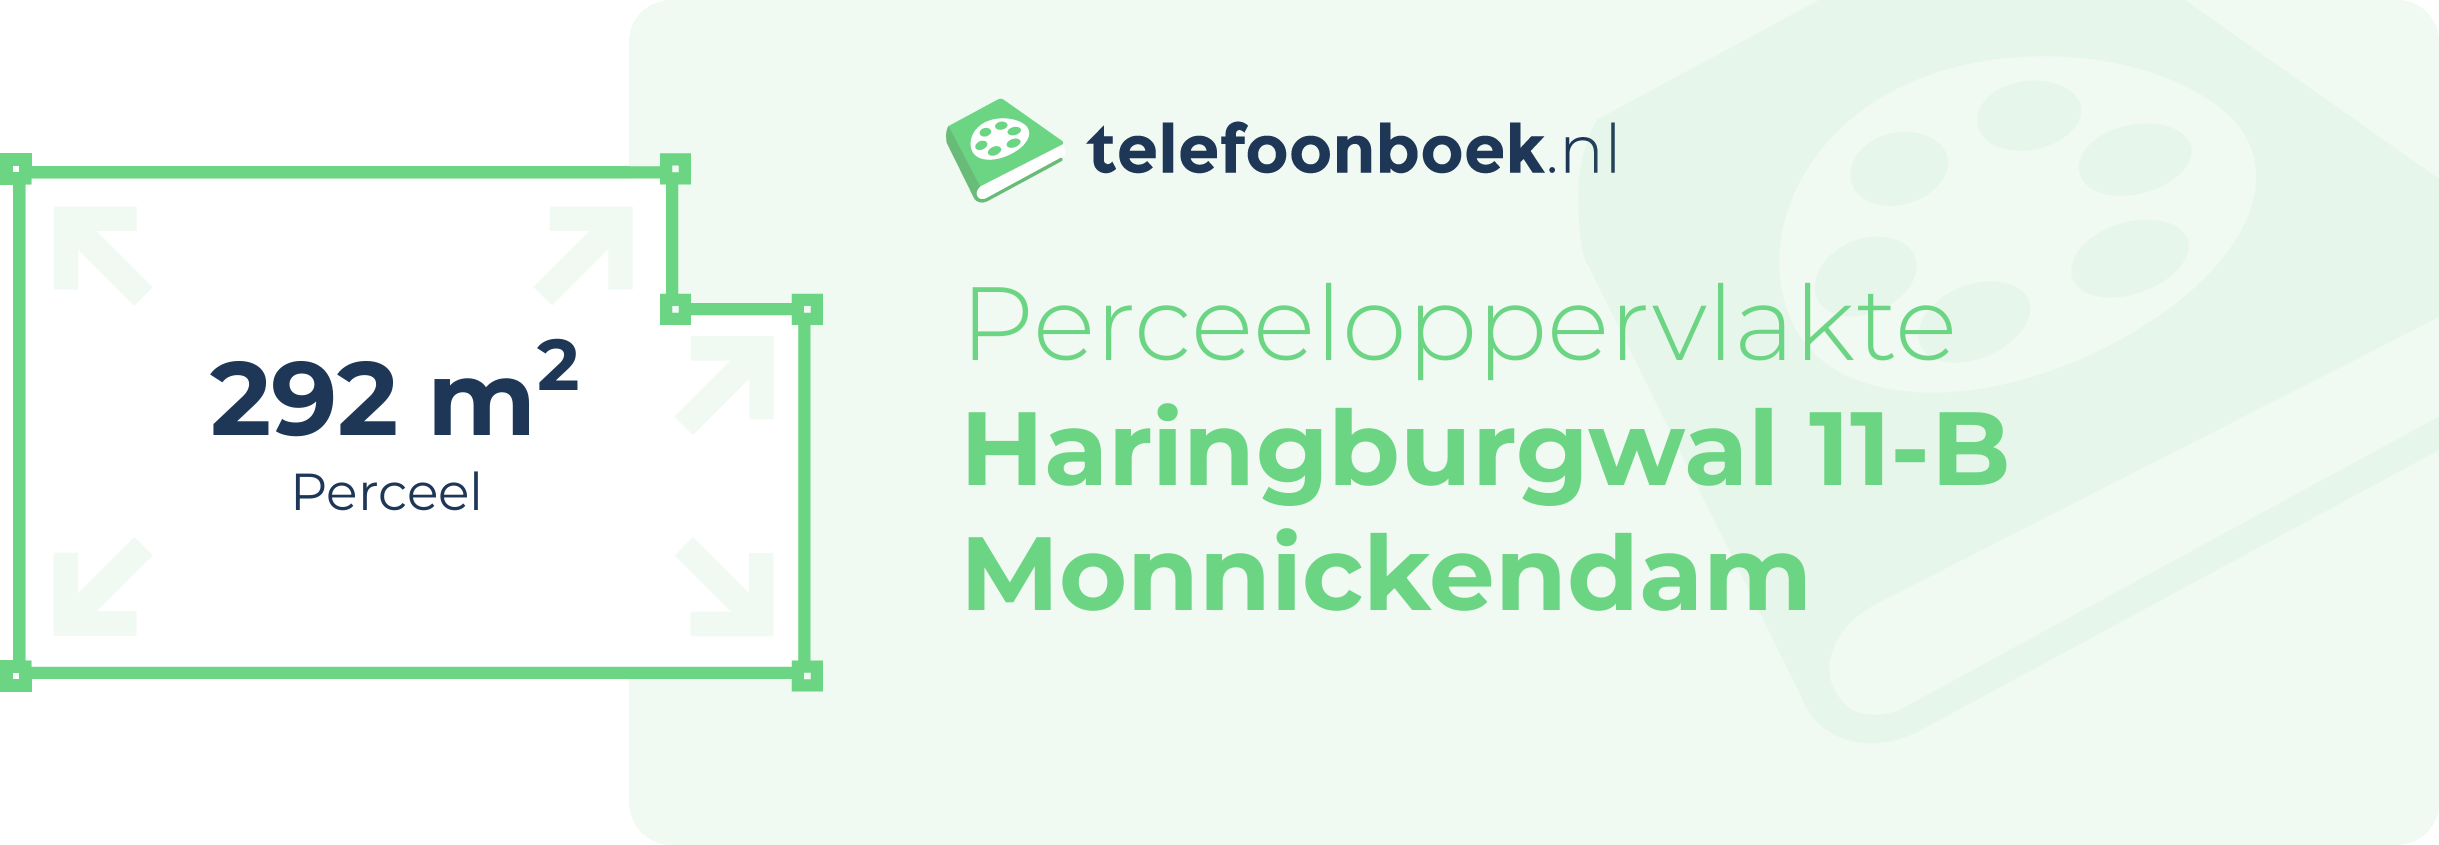 Perceeloppervlakte Haringburgwal 11-B Monnickendam